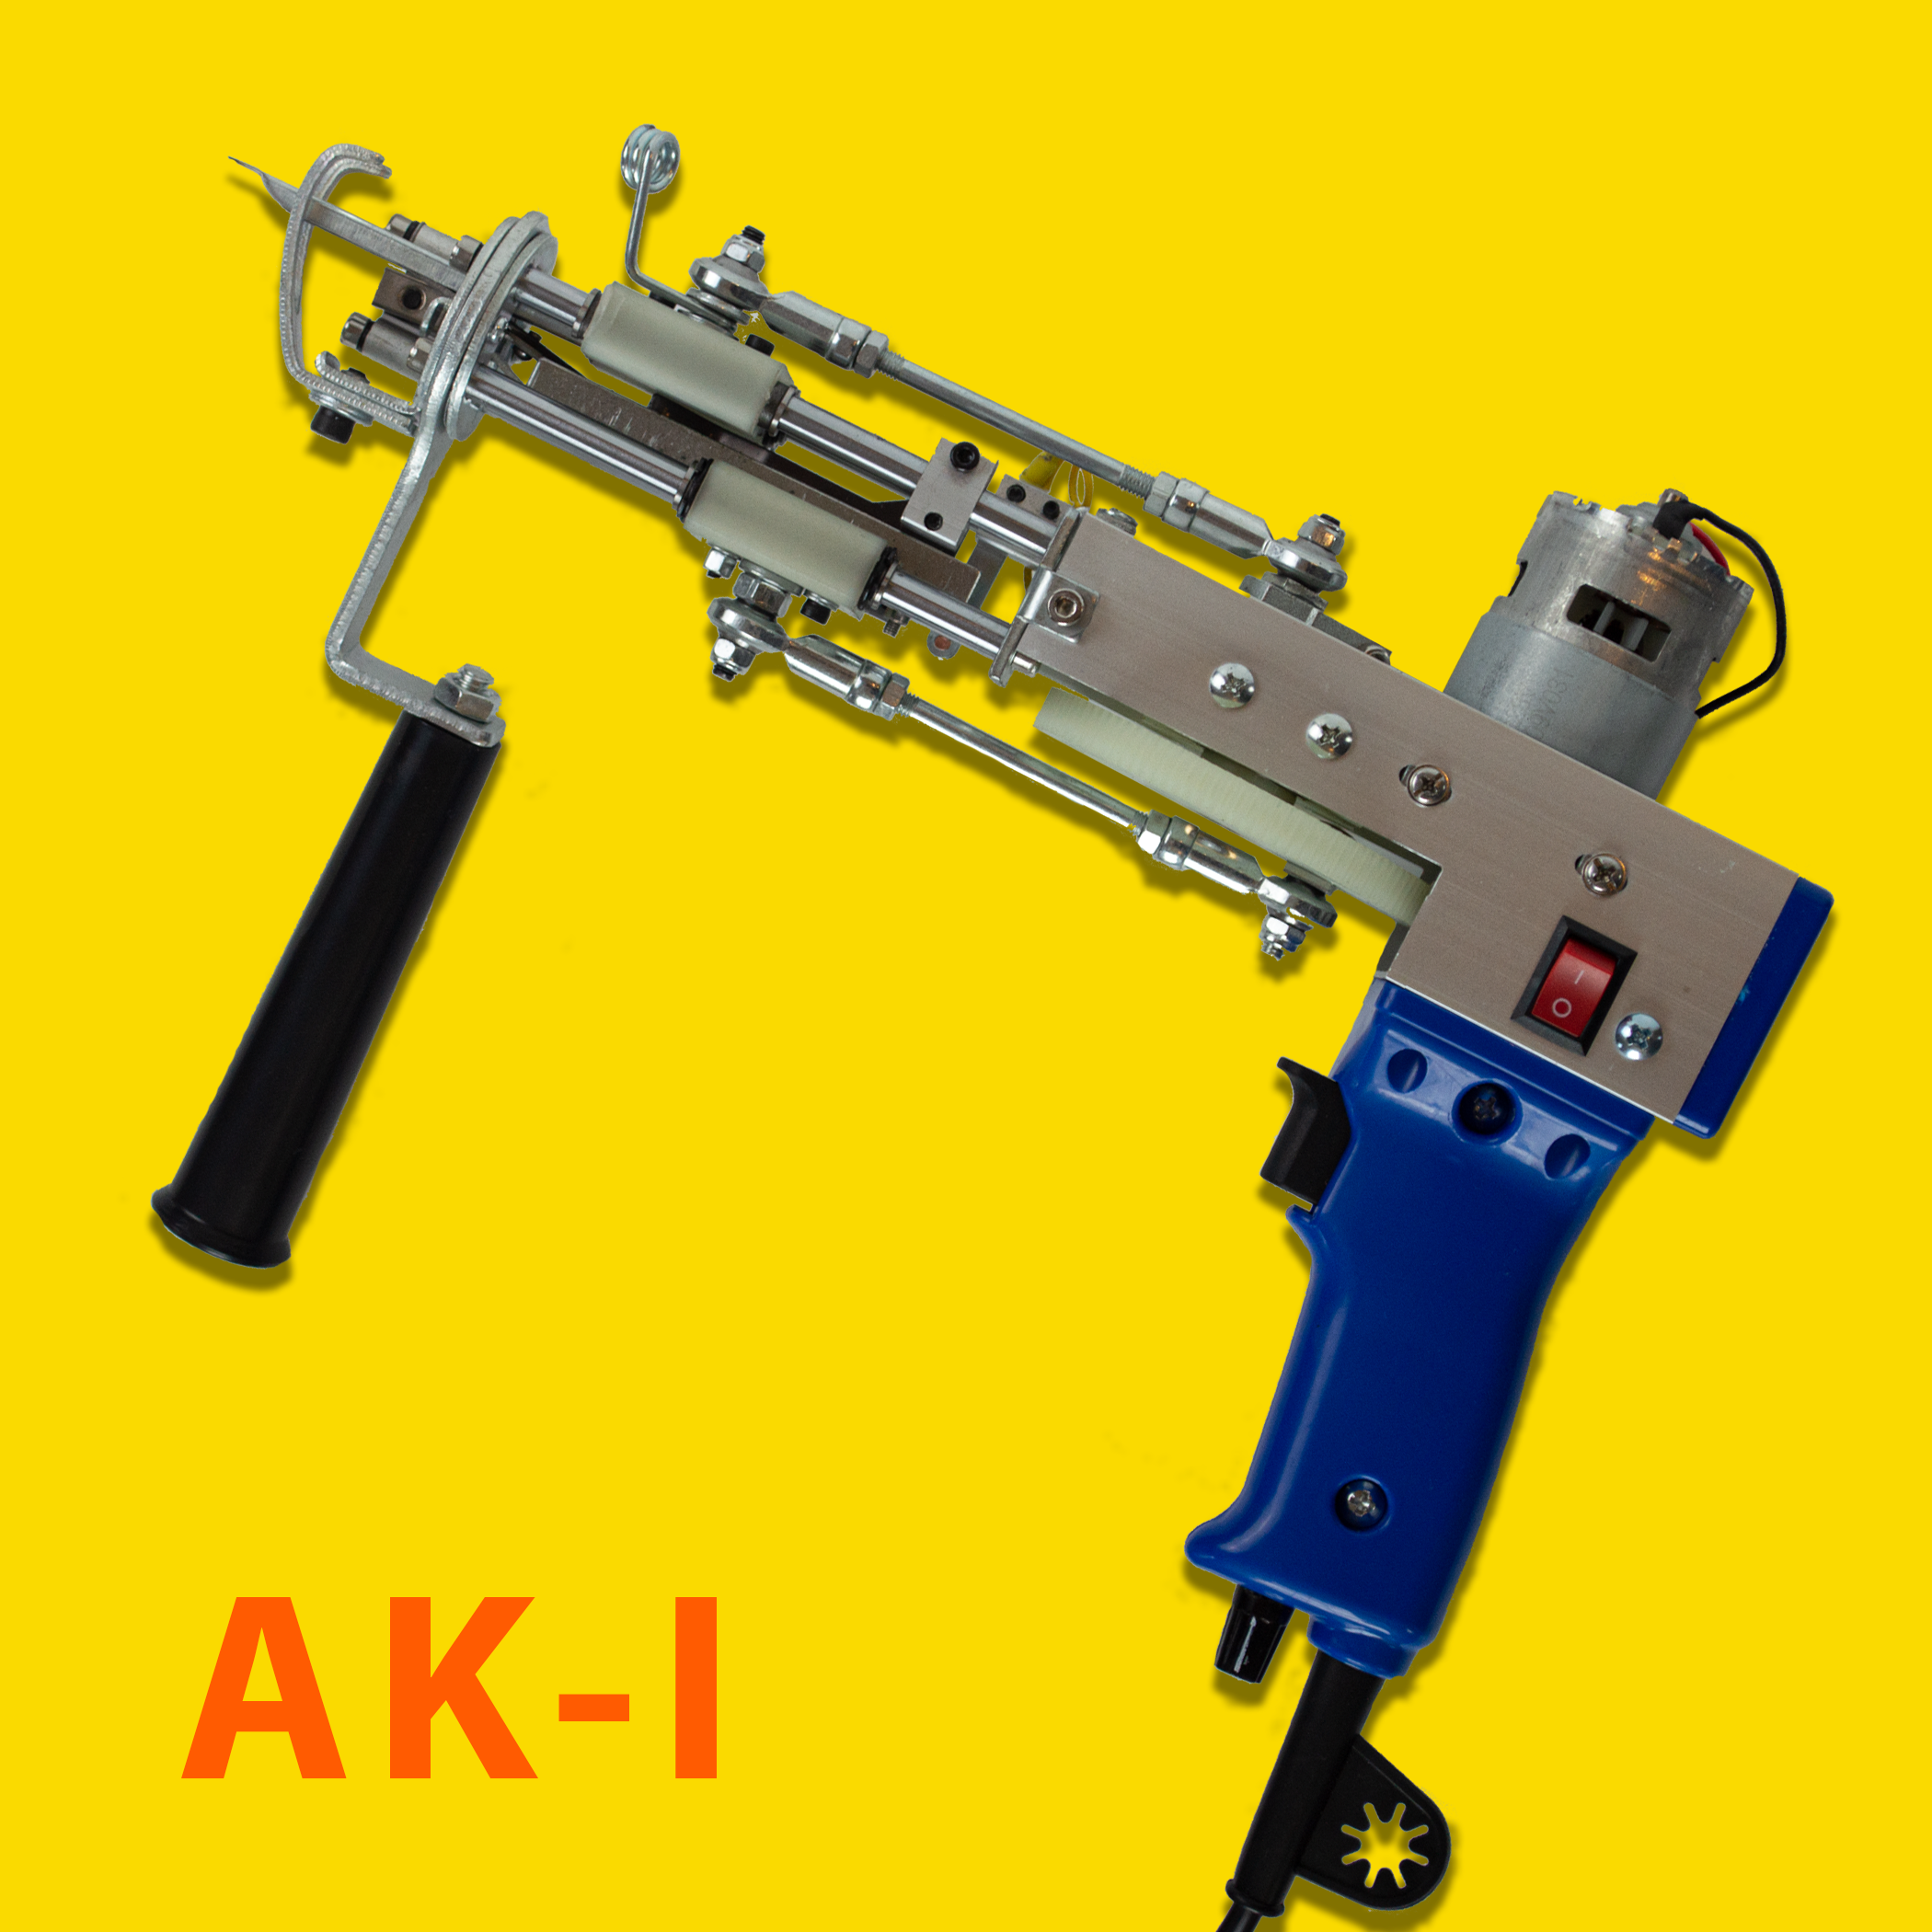 Tufting Machine, Cut Loop Tufting Gun for Rug Tufting, AK-1